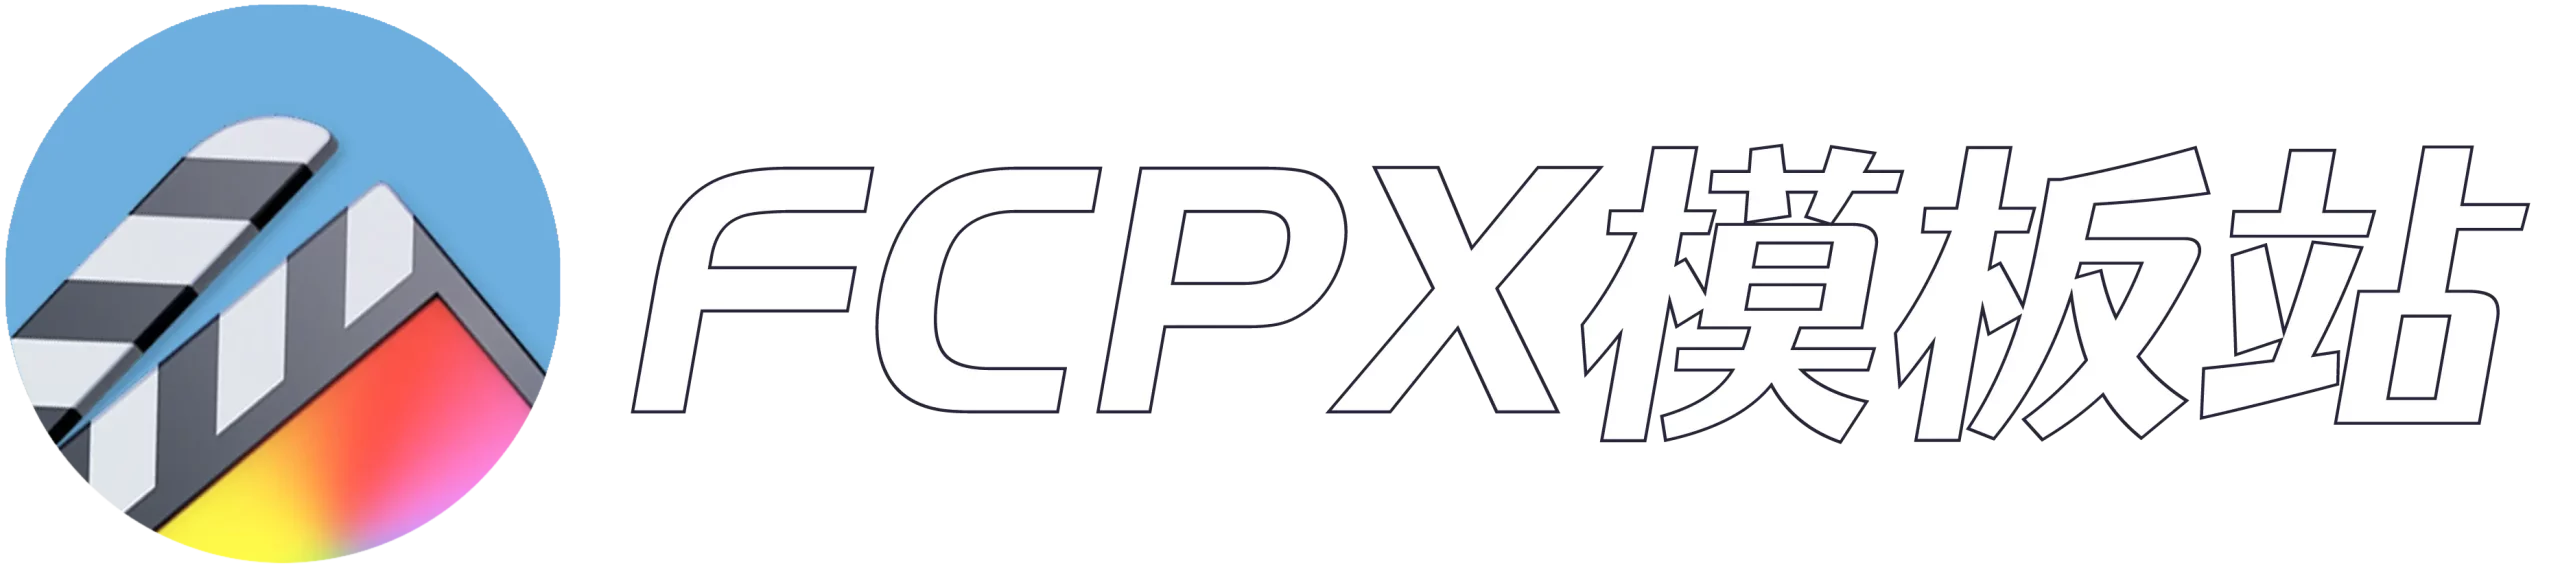 FCPX模板站